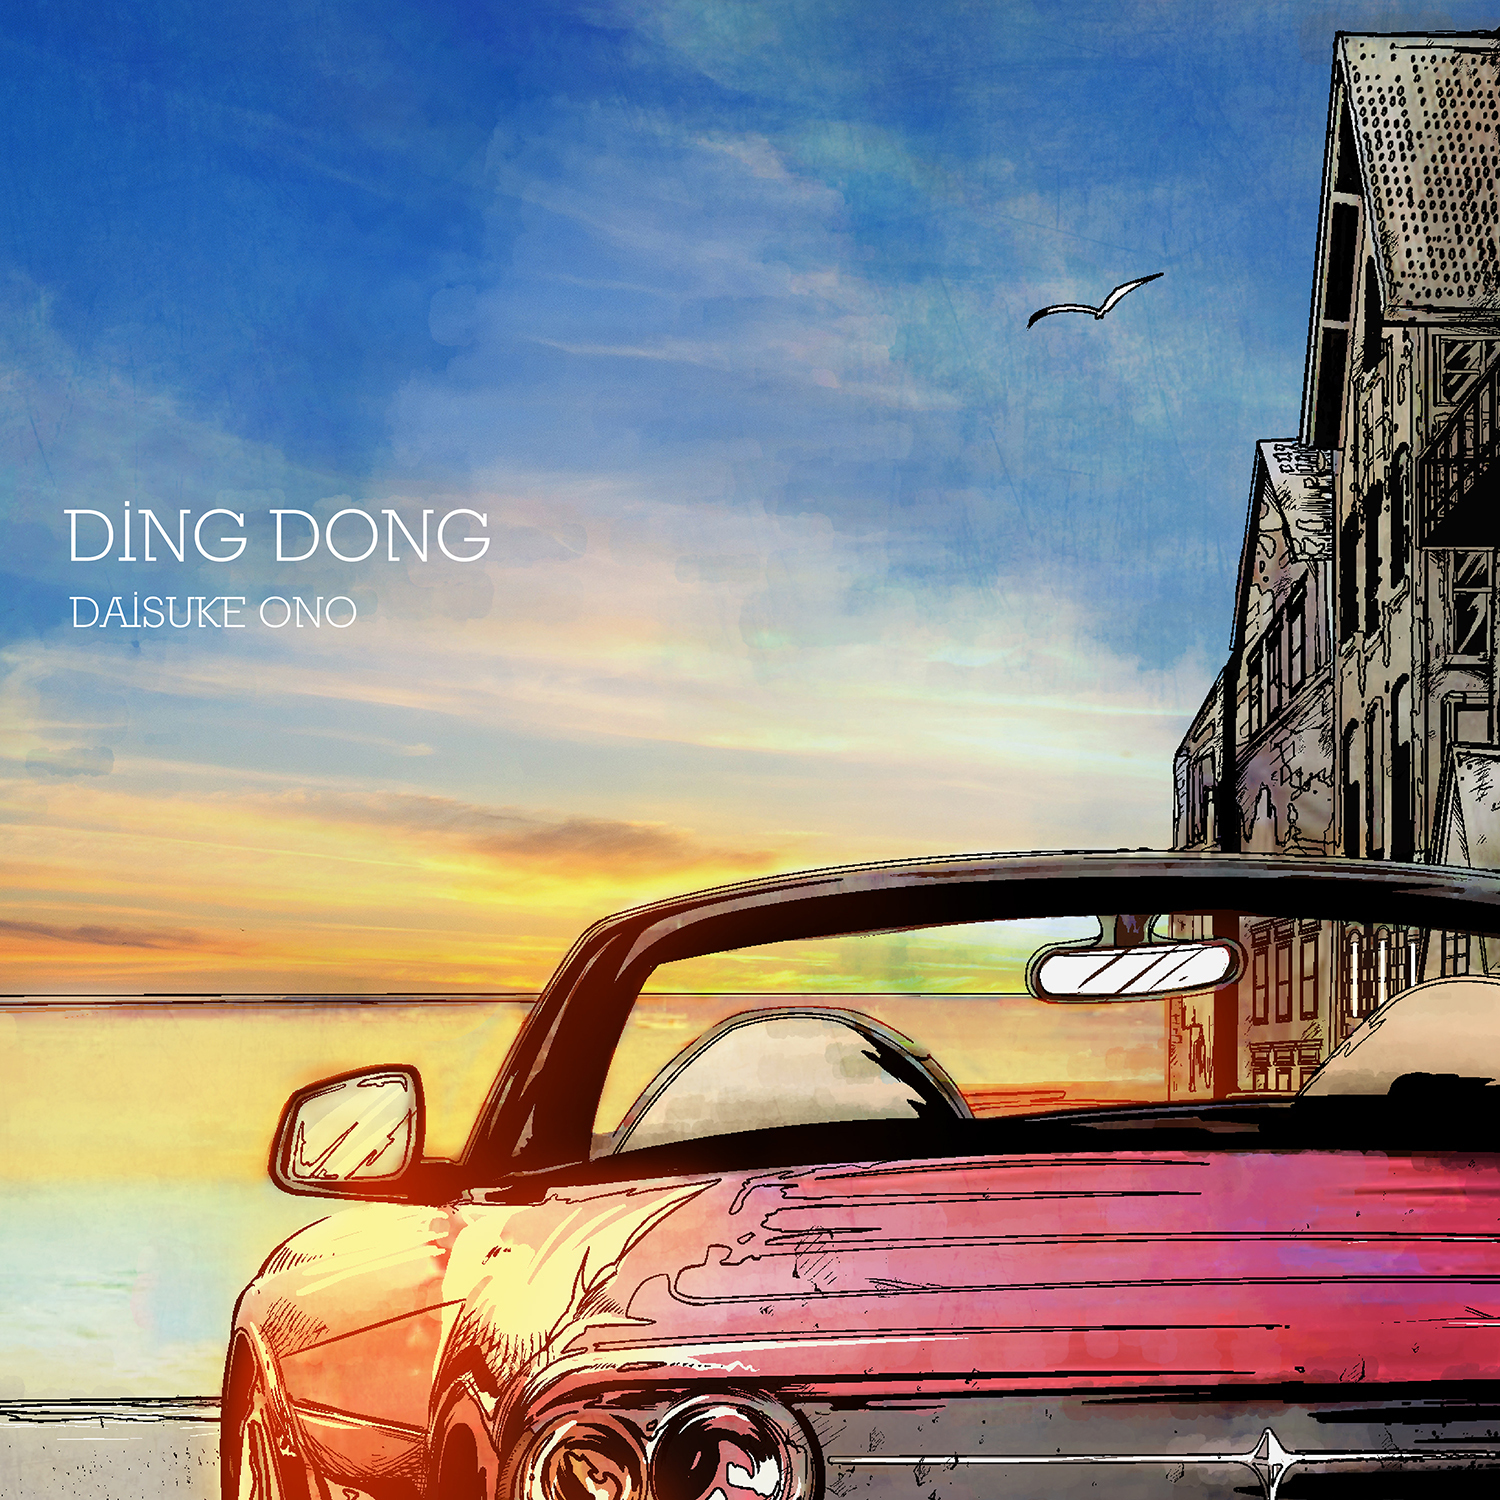 「DING DONG」ジャケット画像